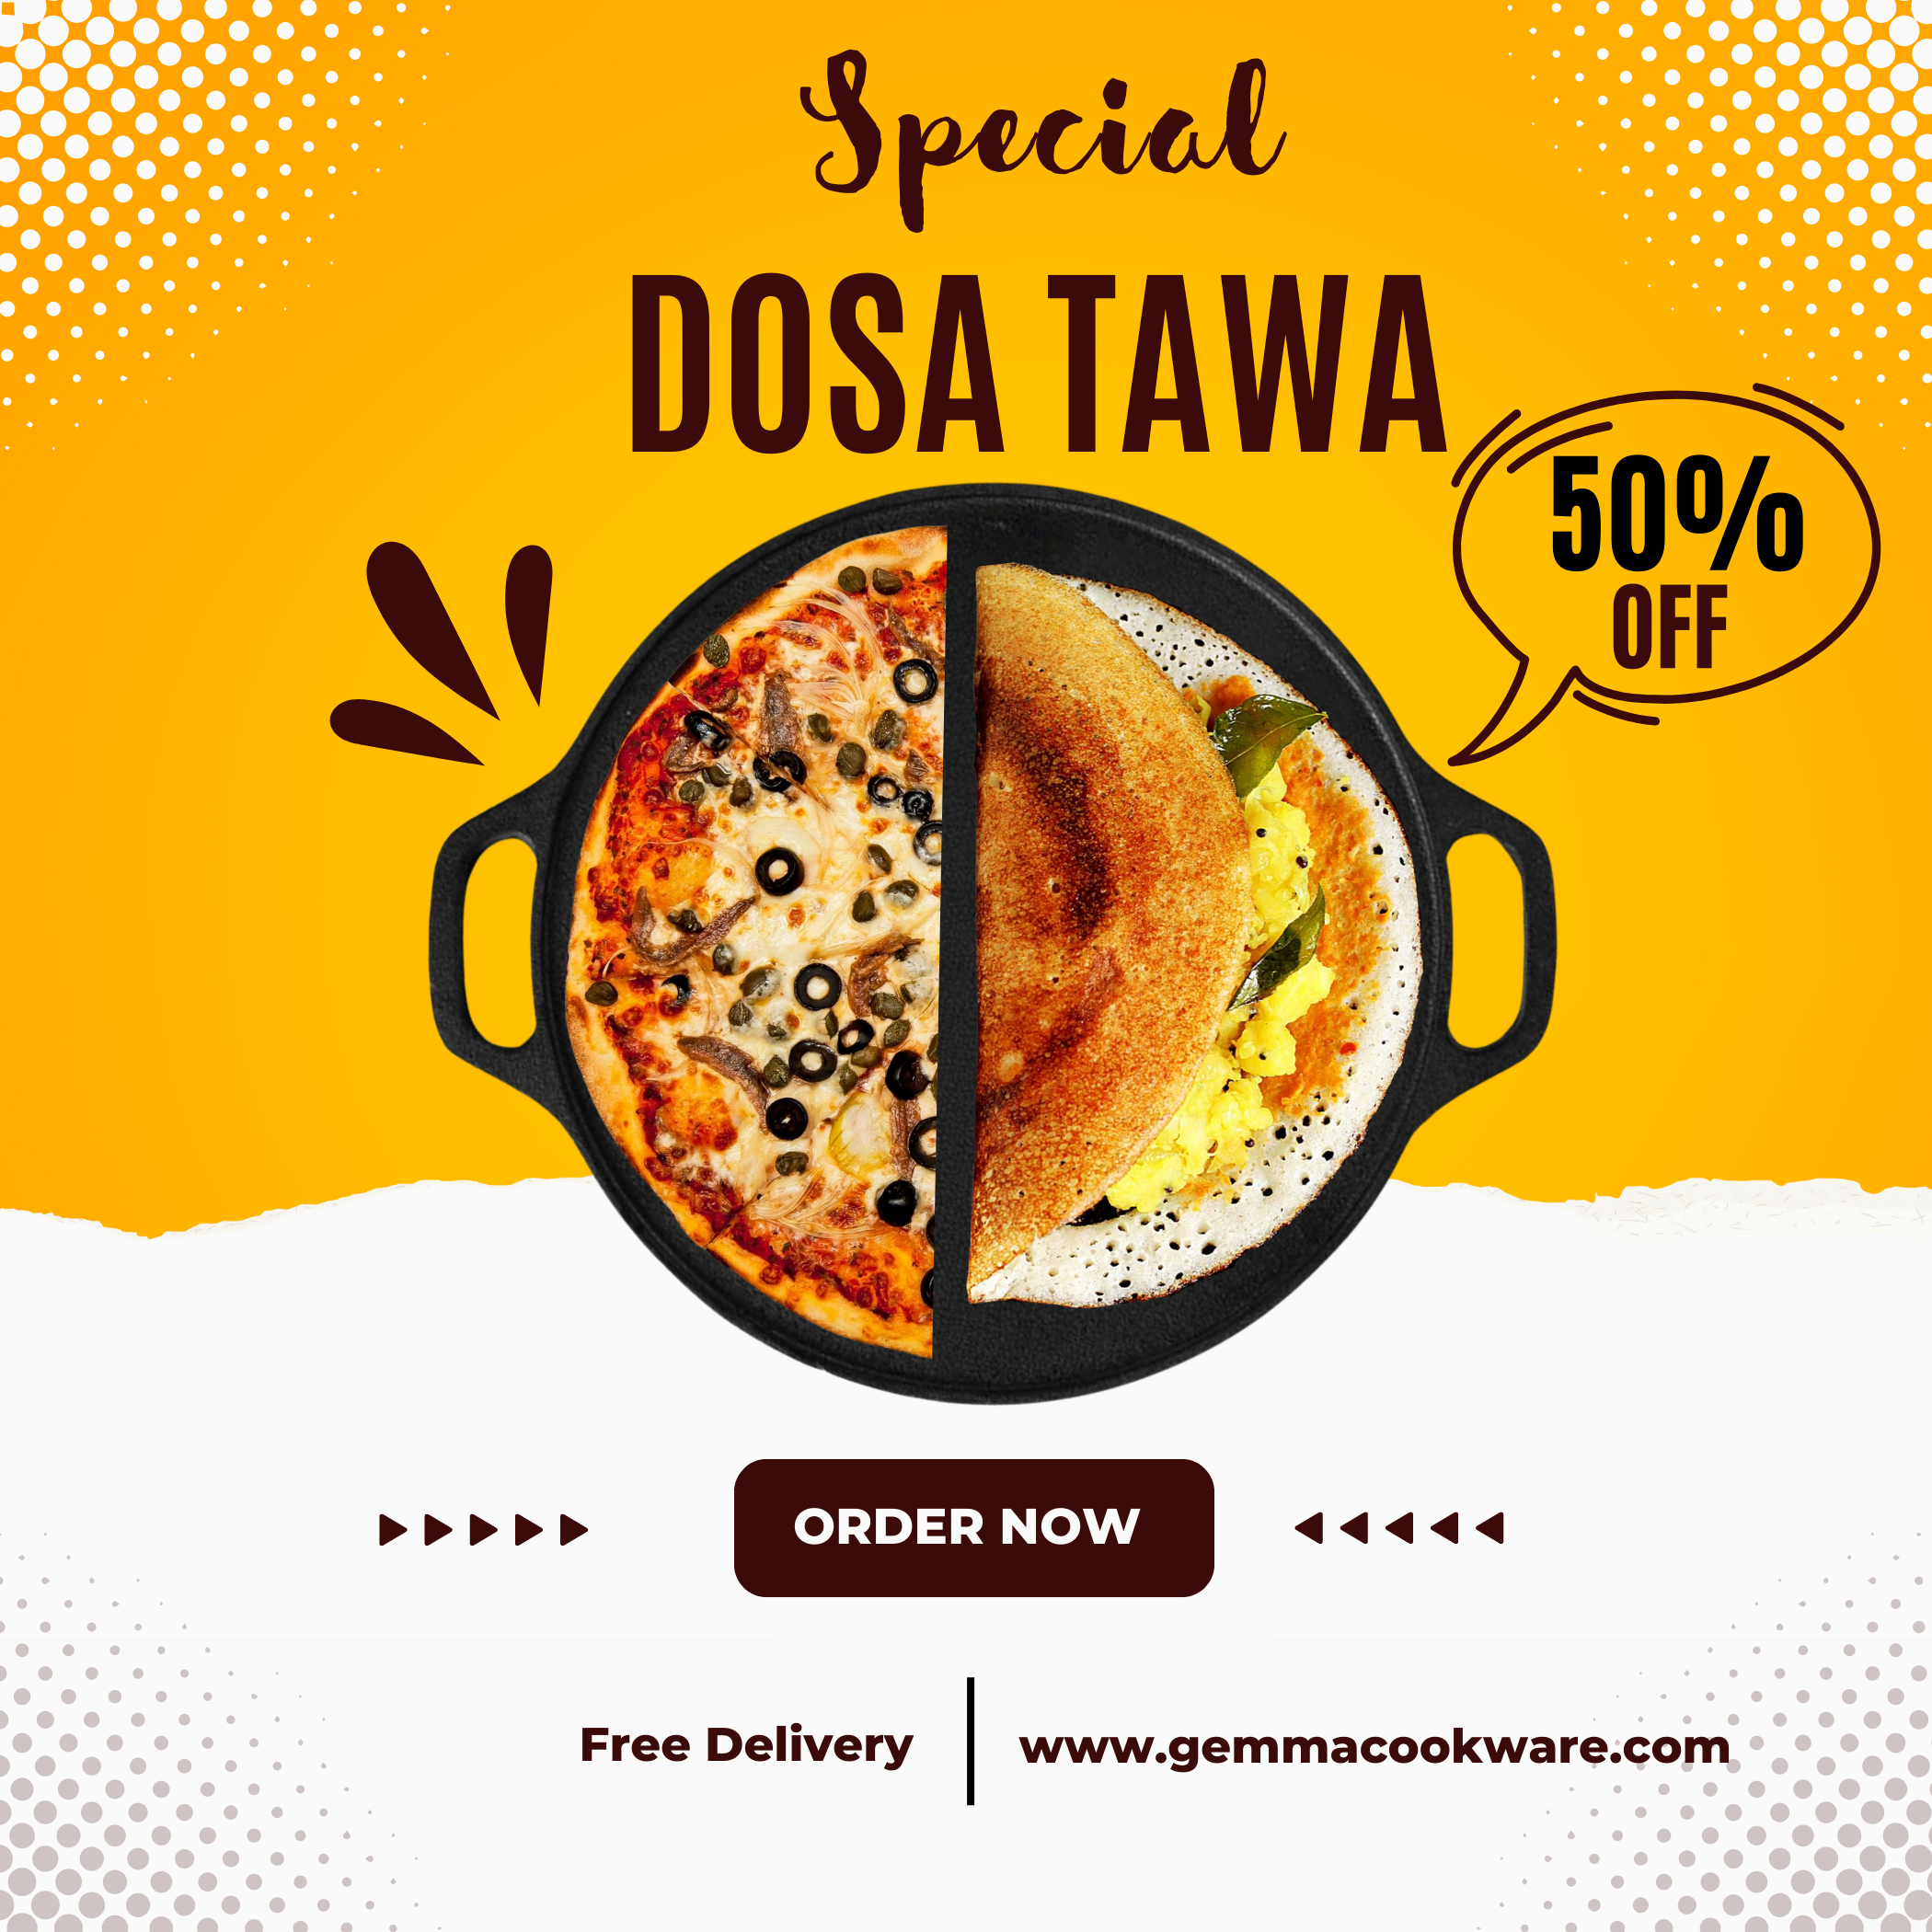 Preseasoned Cast Iron Dosa Tawa Naturally Non Stick Pan for Roti Parantha